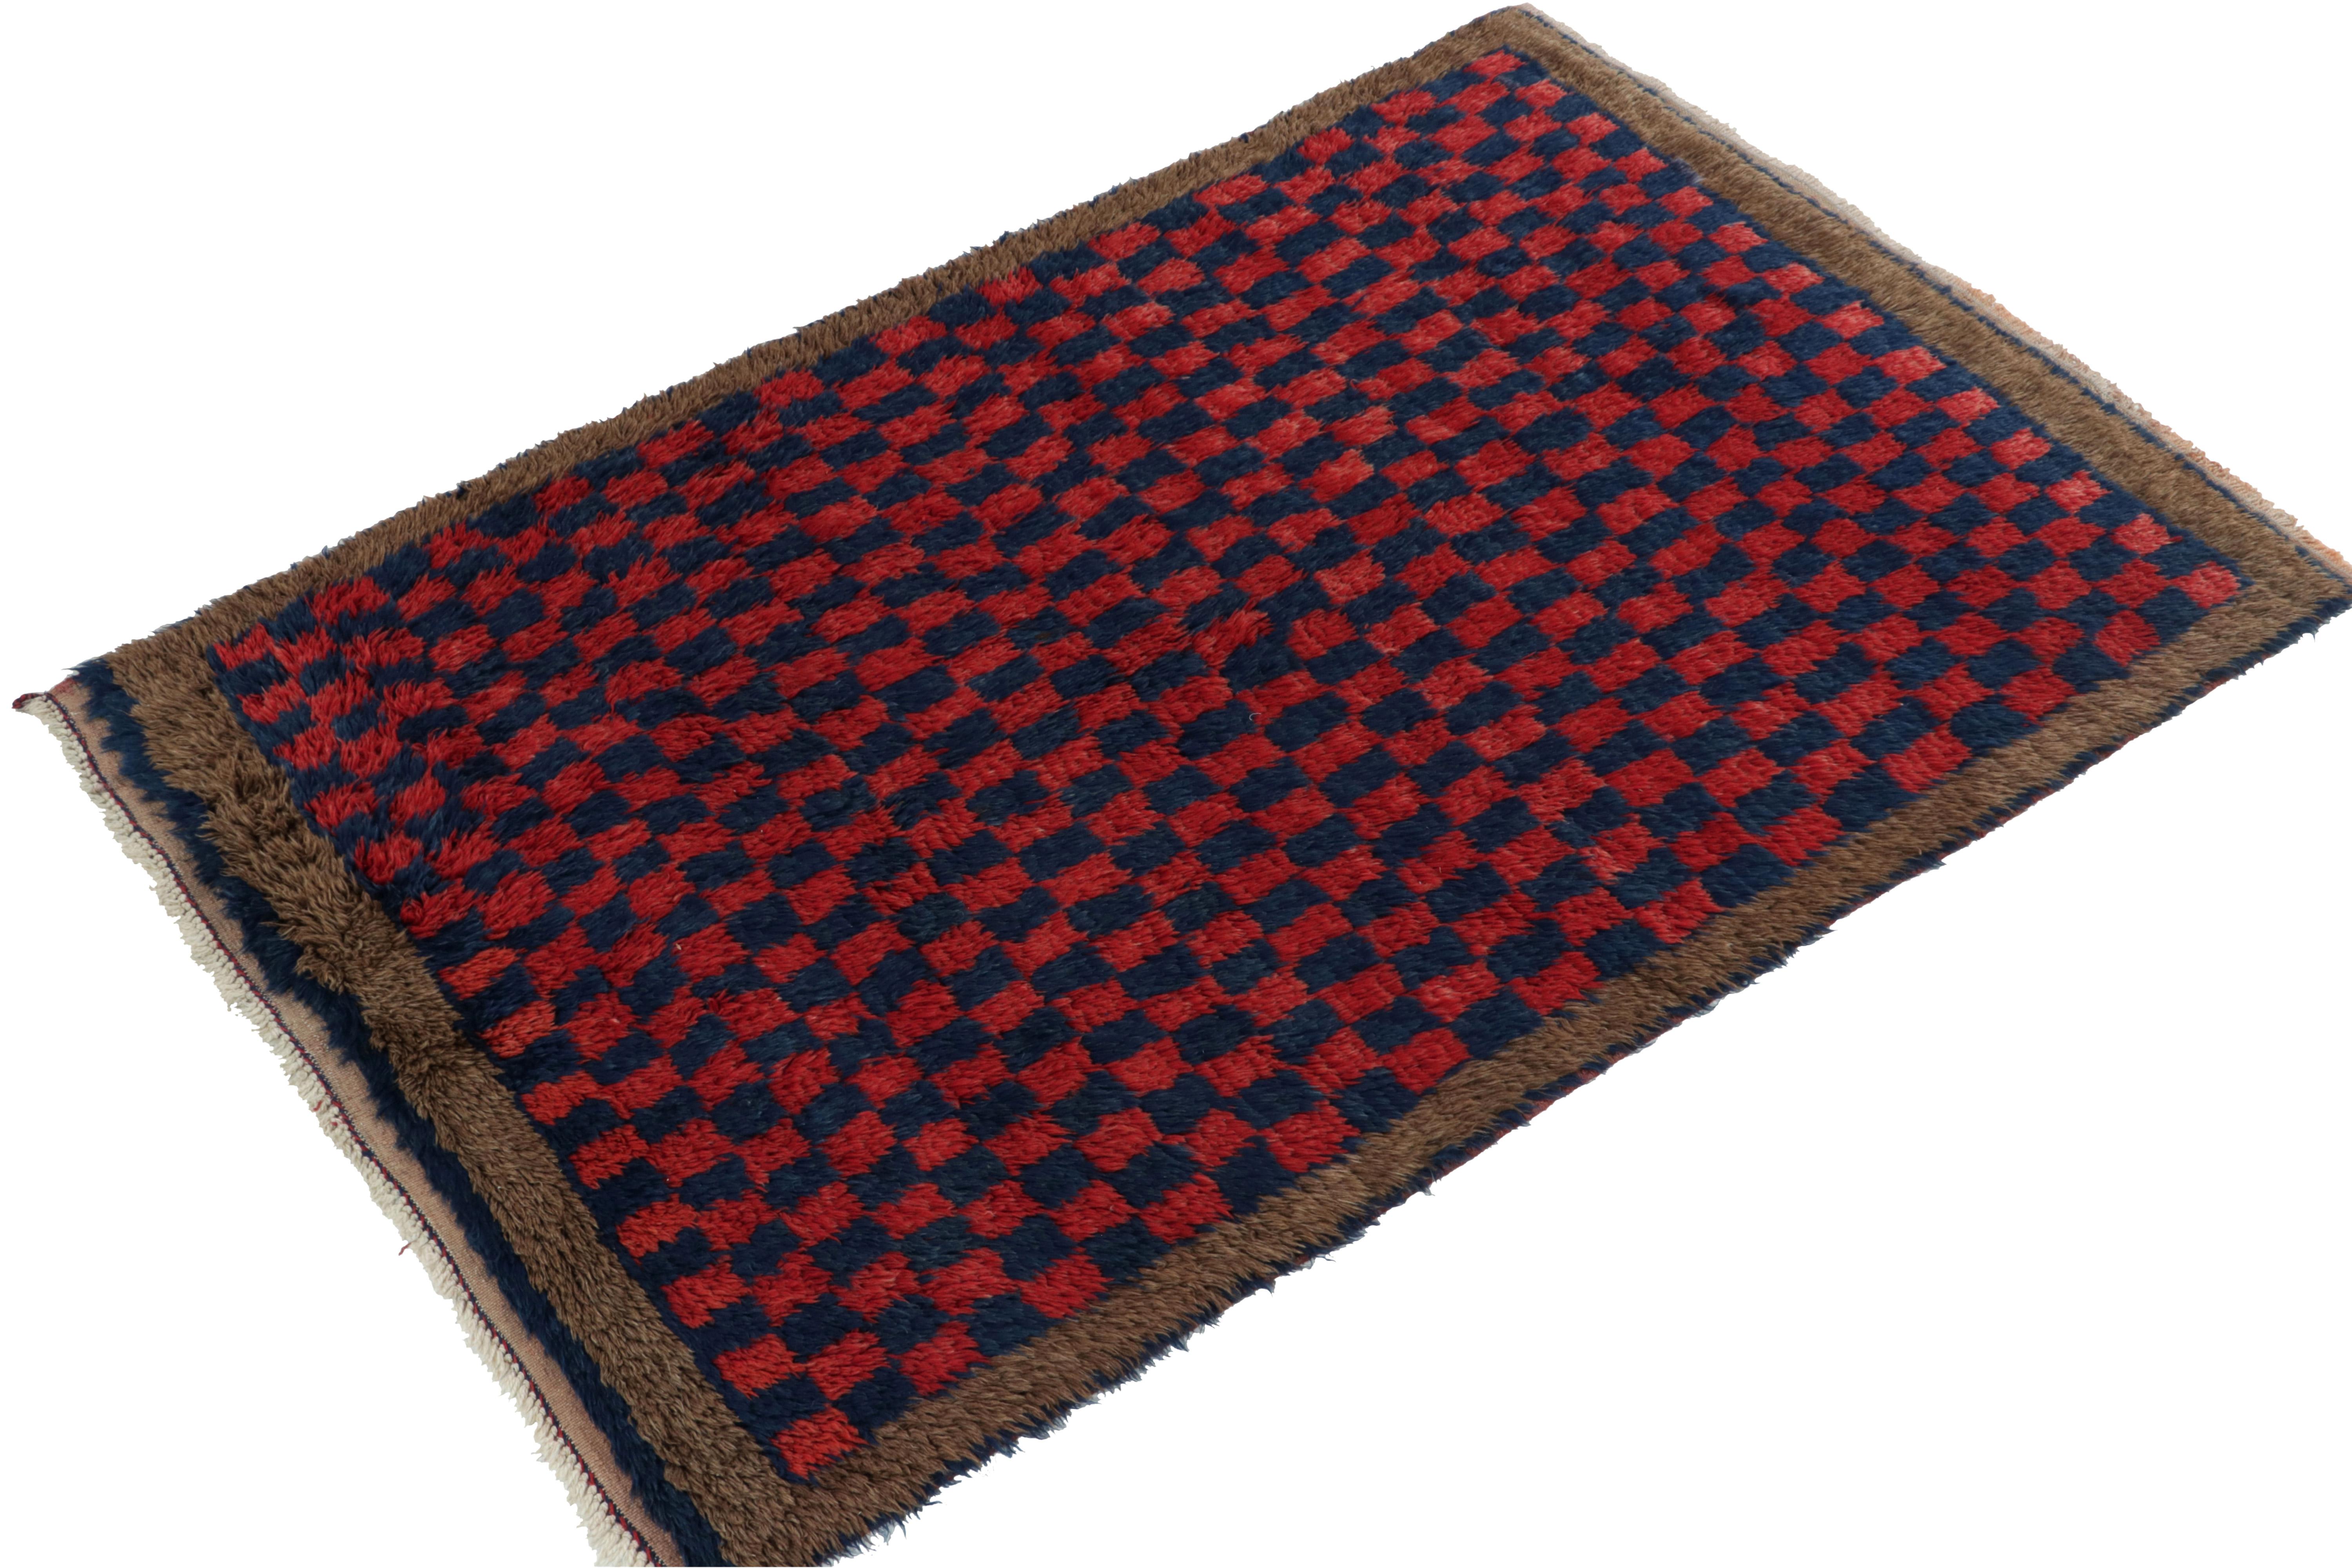 Tribal 1950s Vintage Tulu Rug in Red, Blue, Brown Geometric Pattern by Rug & Kilim For Sale